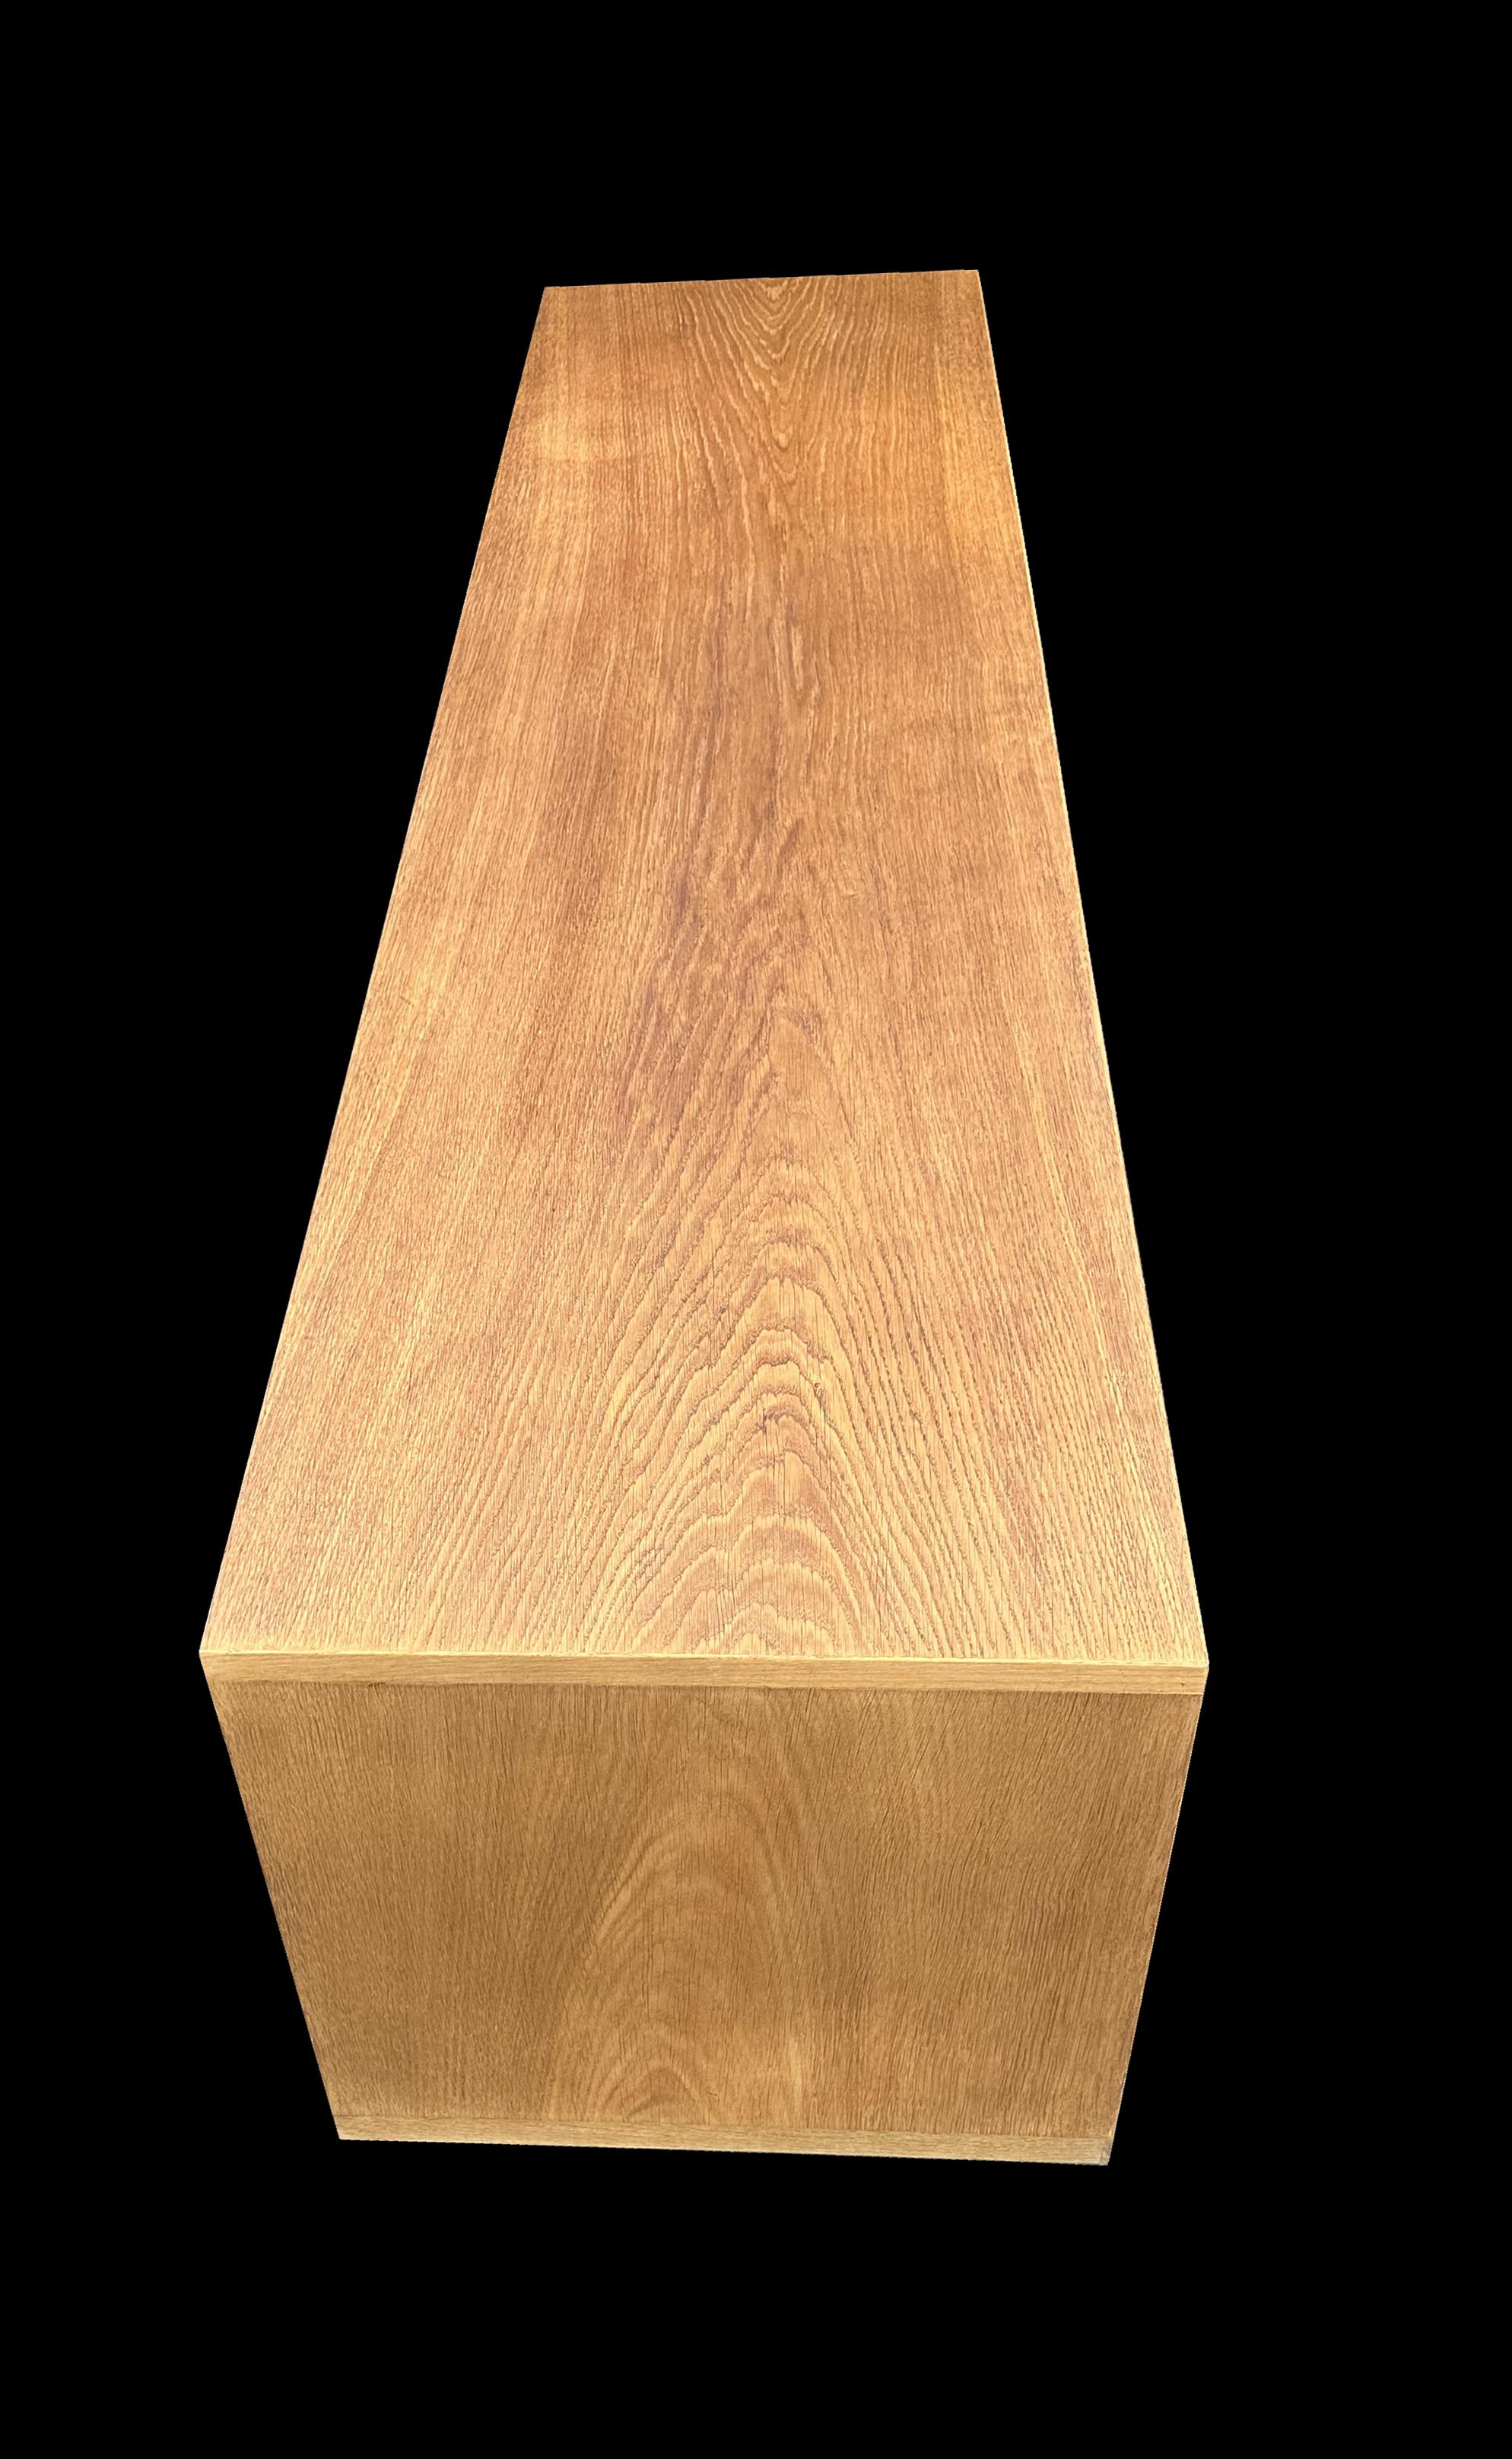 Rattan Oak Sideboard RY26 by Hans Wegner for Ry Mobler, supplied by Johannes Hansen